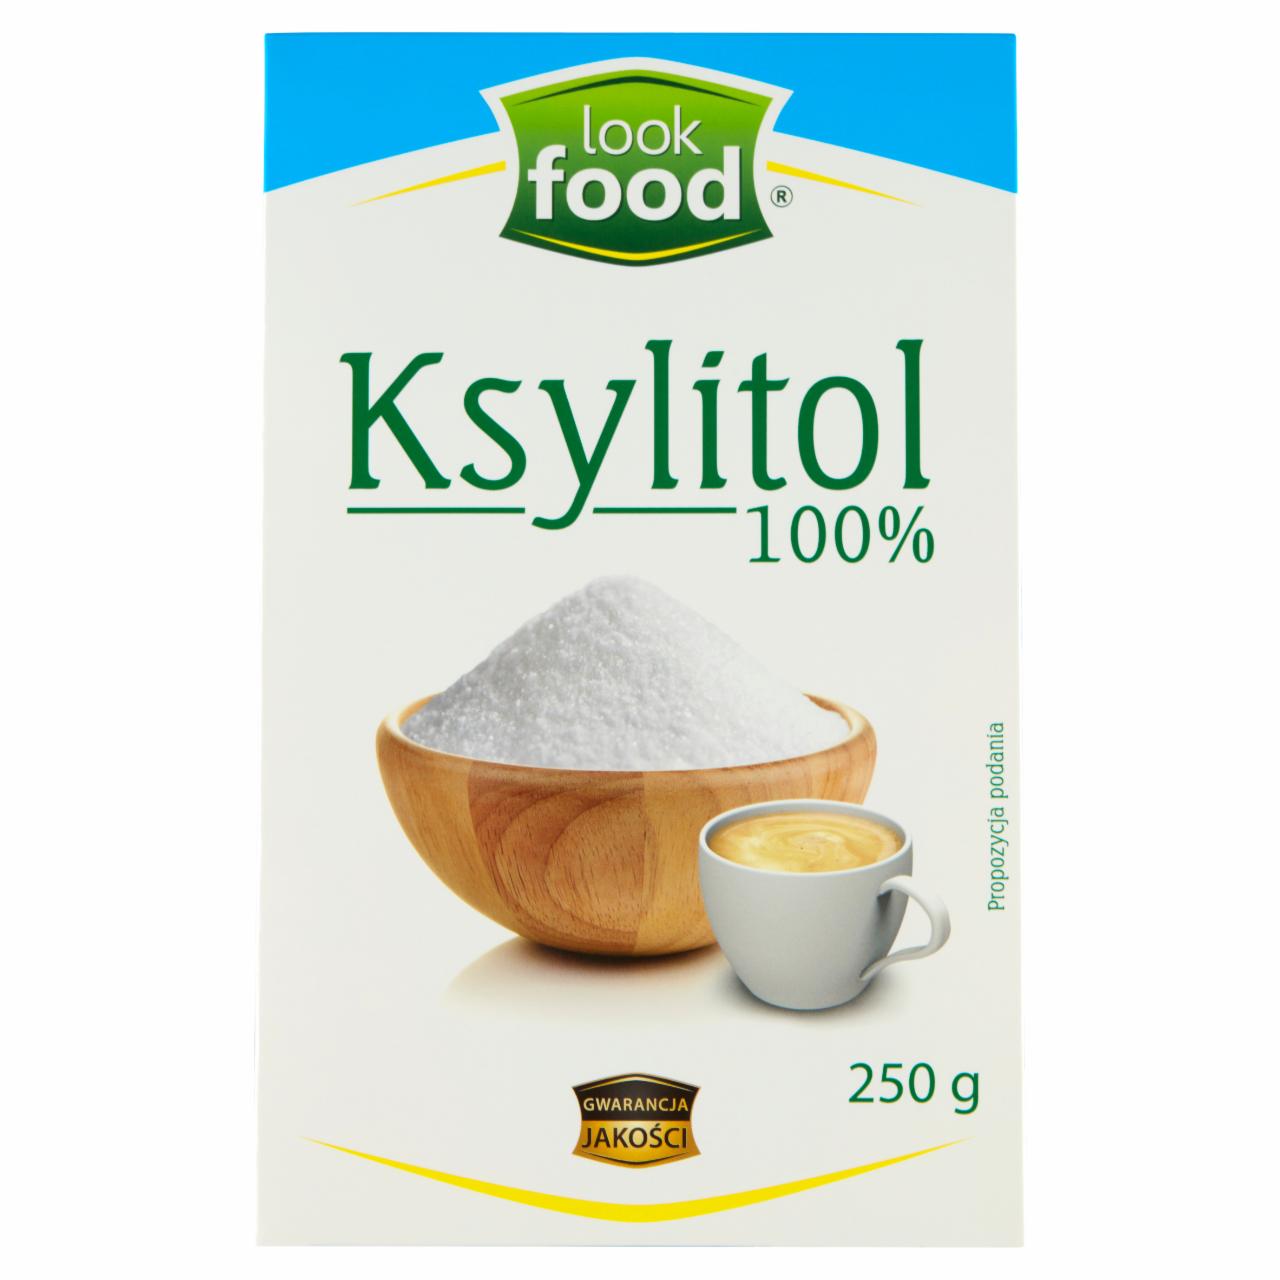 Zdjęcia - Look Food Ksylitol 100% 250 g